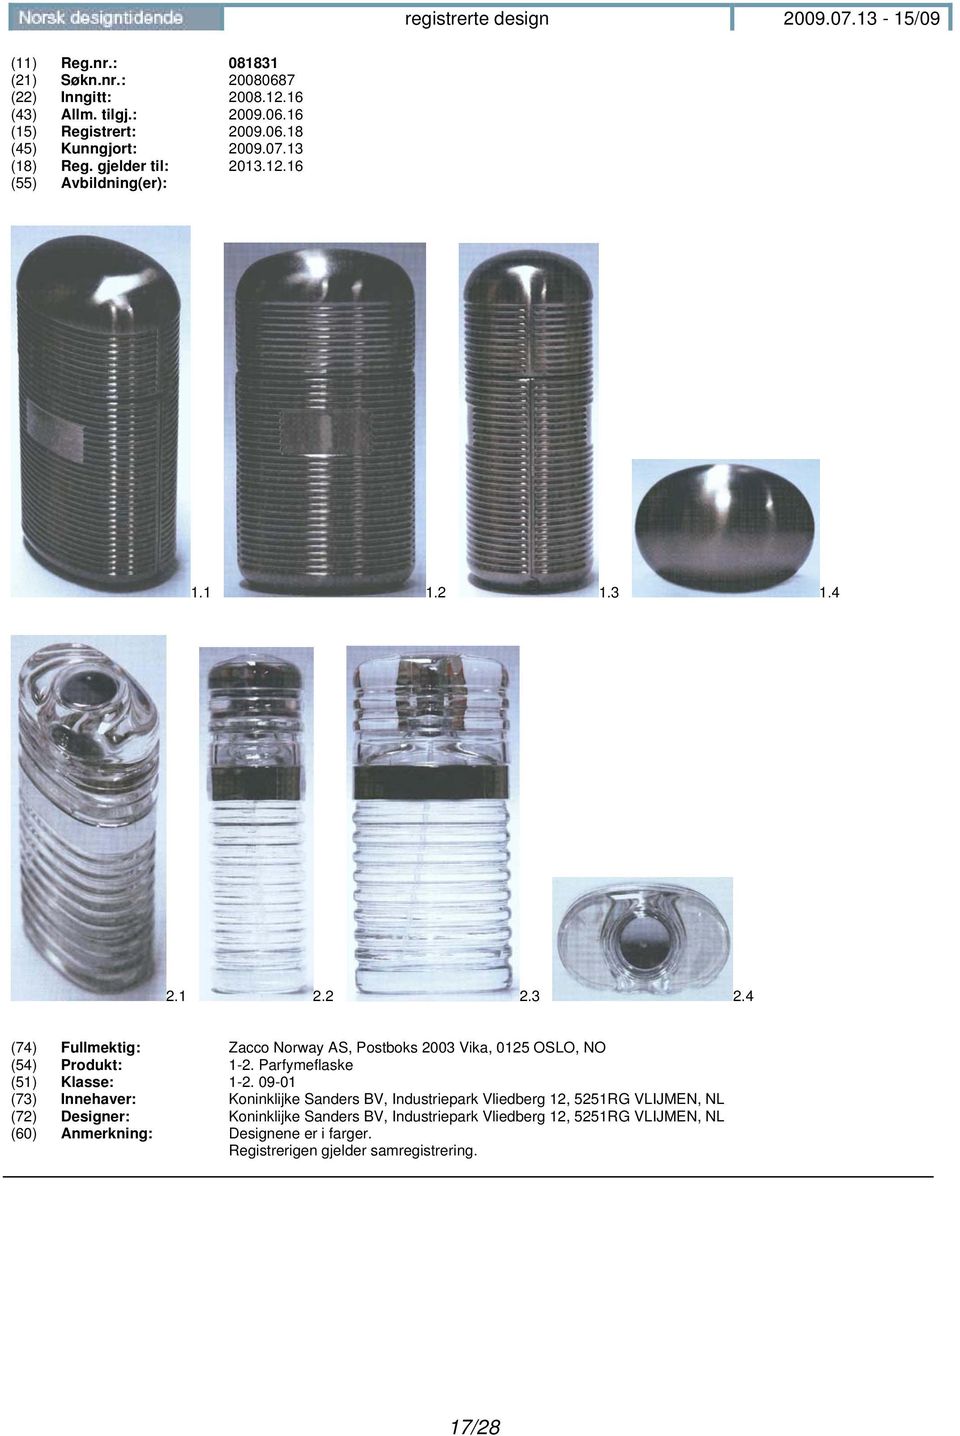 Parfymeflaske (51) Klasse: 1-2.